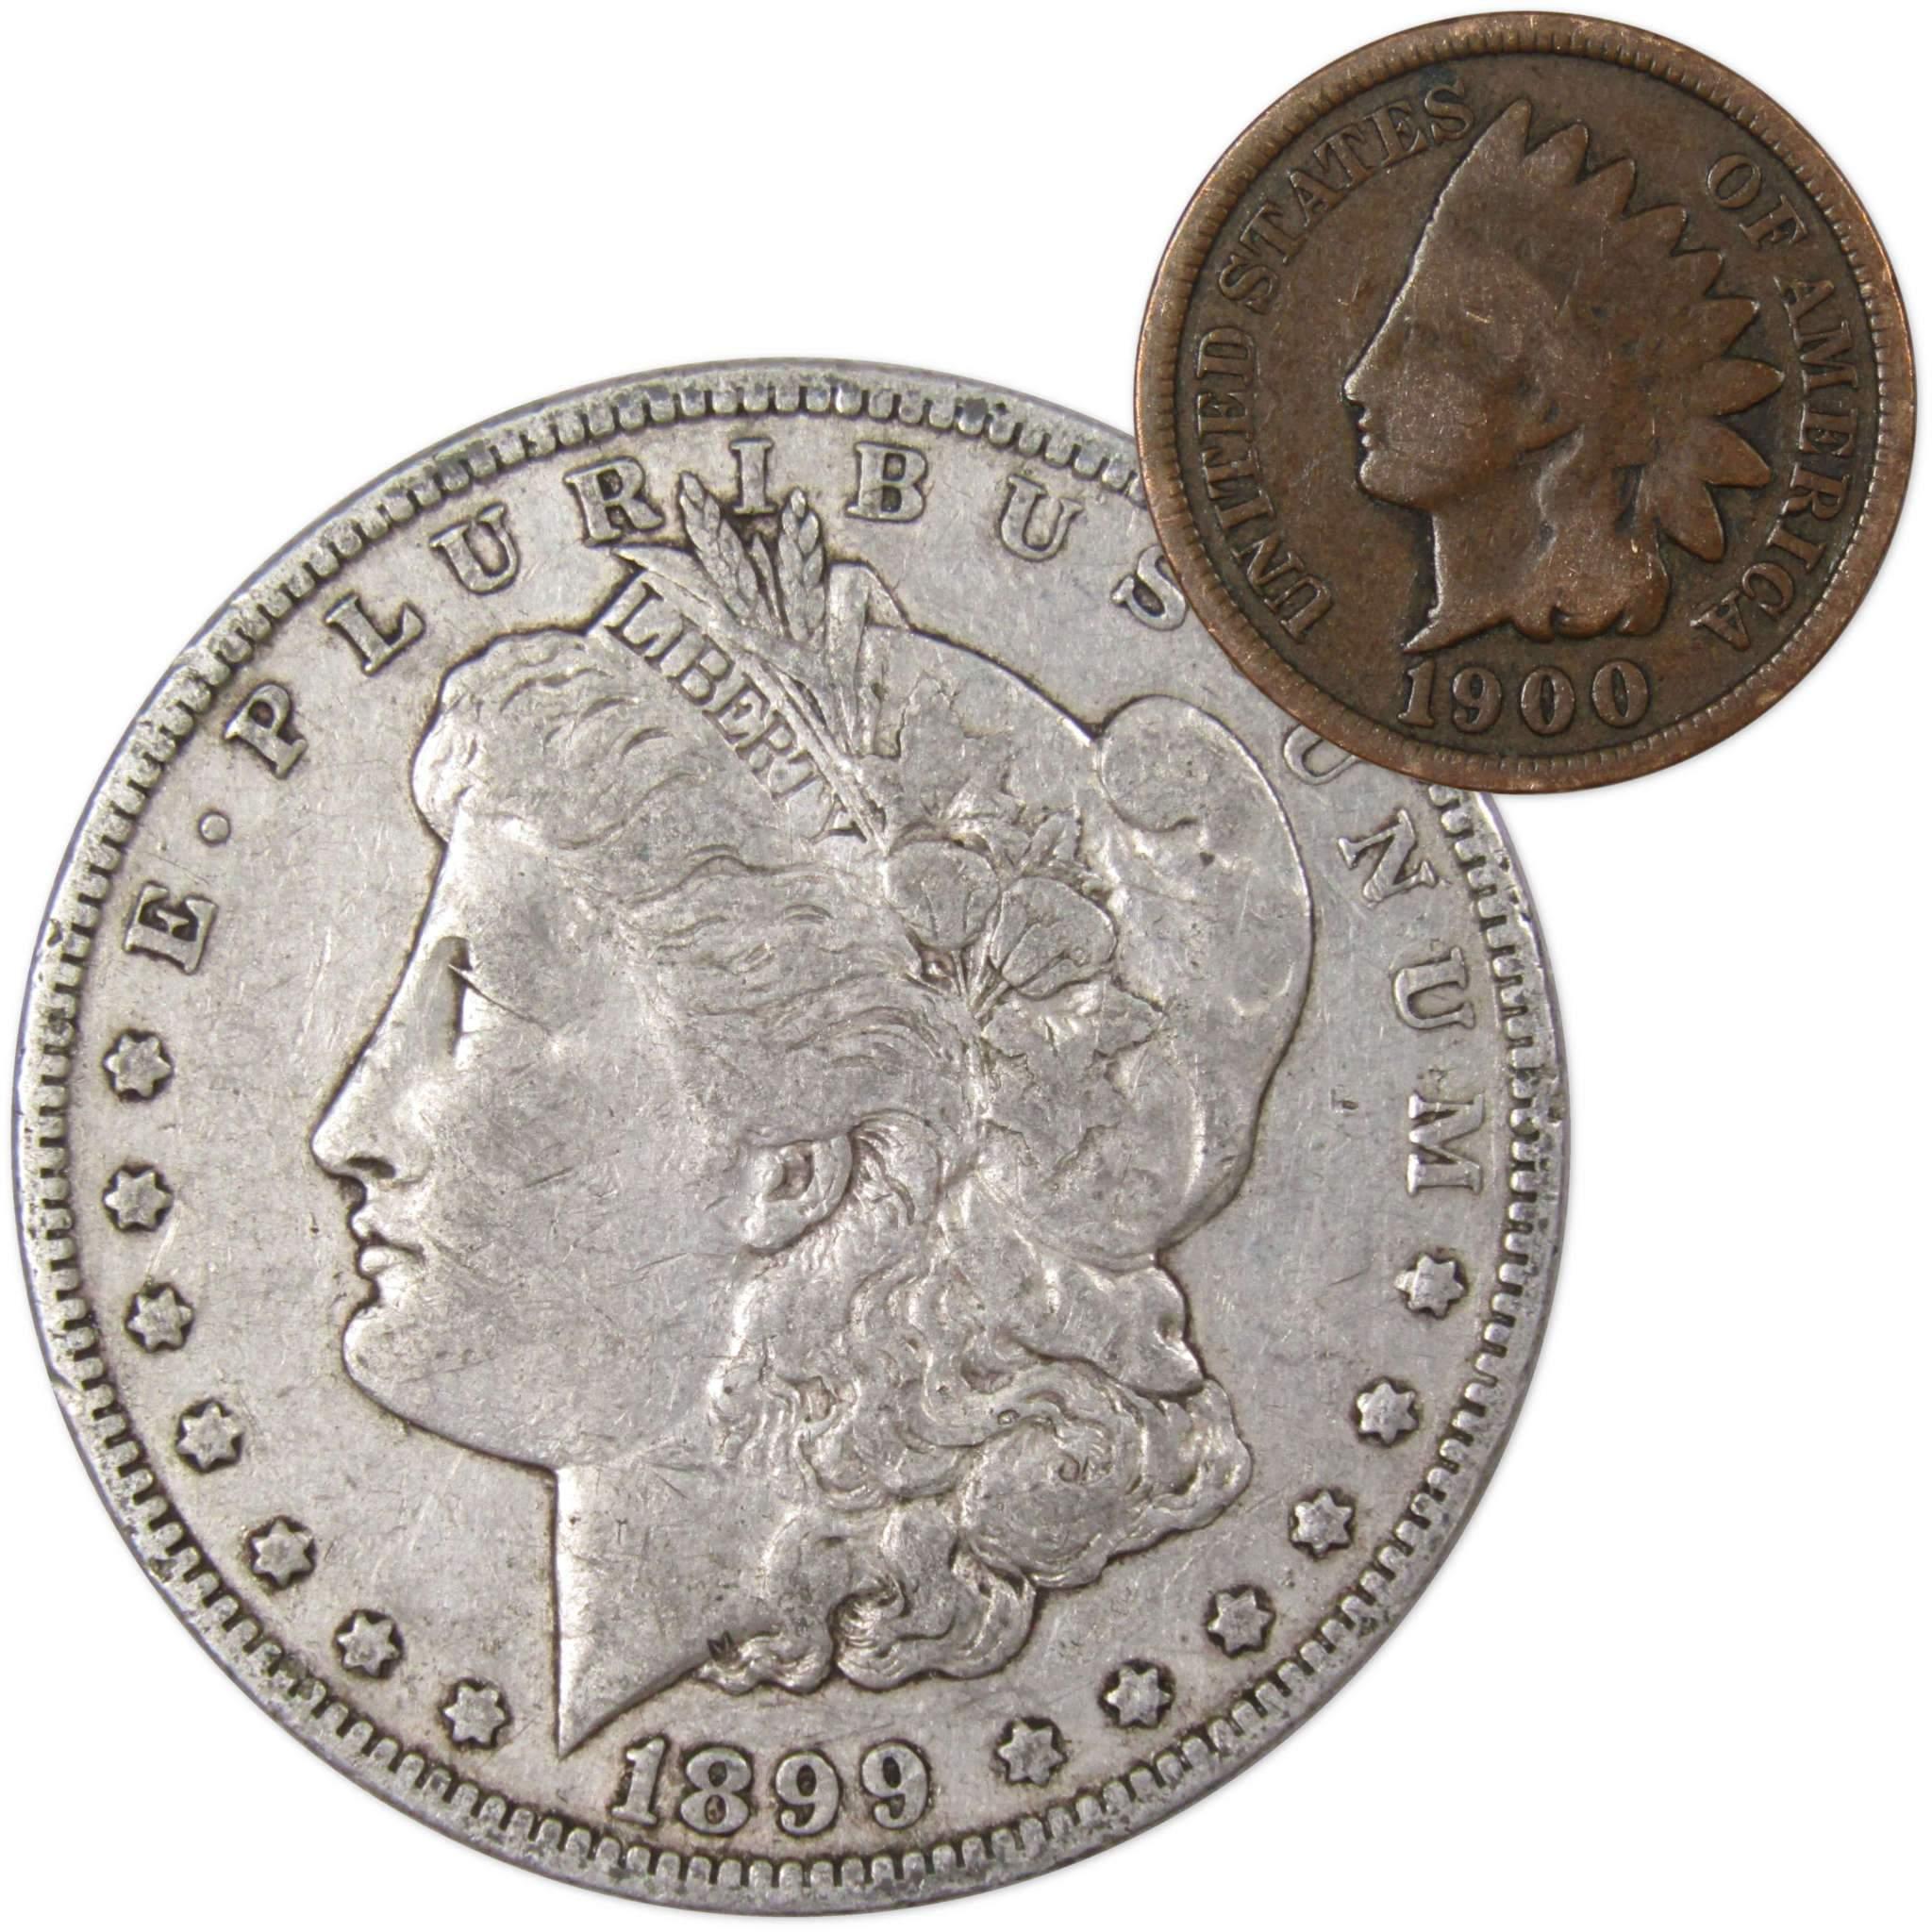 1899 O Morgan Dollar F Fine 90% Silver Coin with 1900 Indian Head Cent G Good - Morgan coin - Morgan silver dollar - Morgan silver dollar for sale - Profile Coins &amp; Collectibles